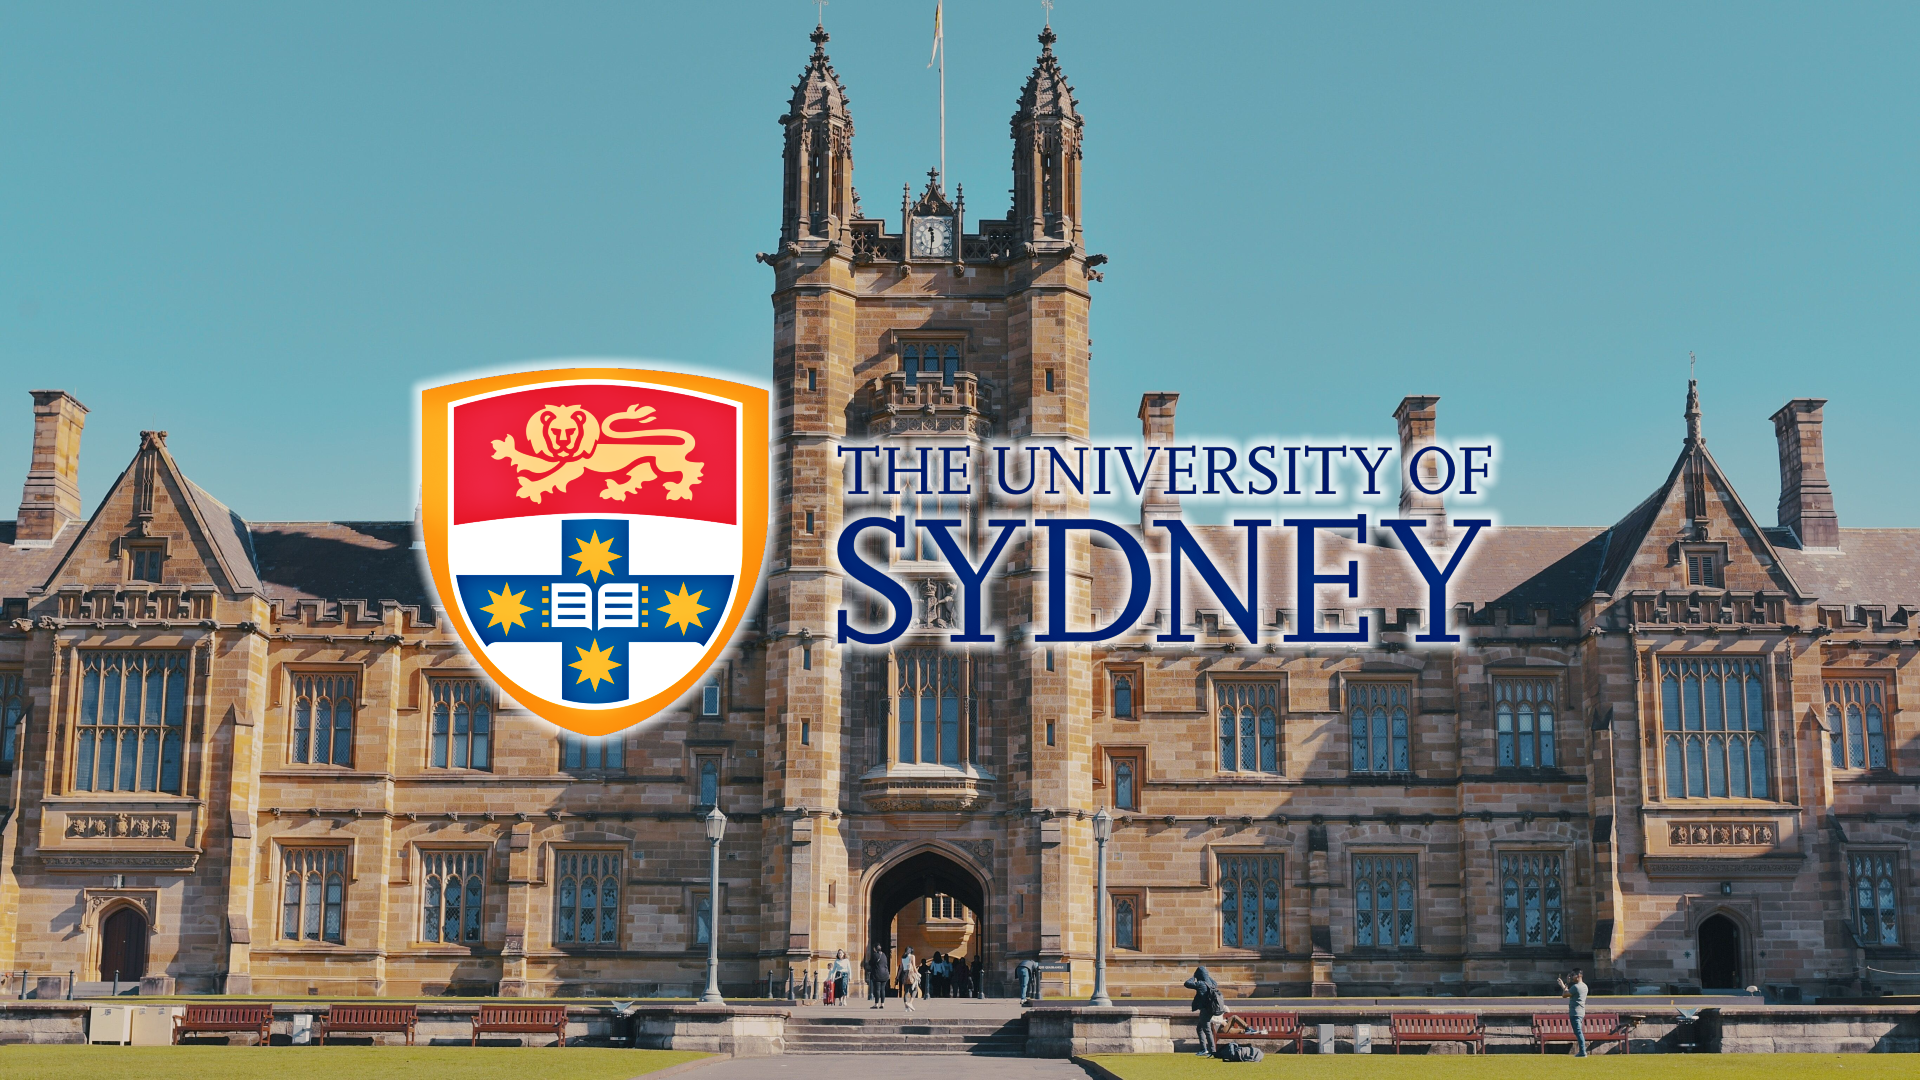 University of Sydney data breach impacts recent applicants